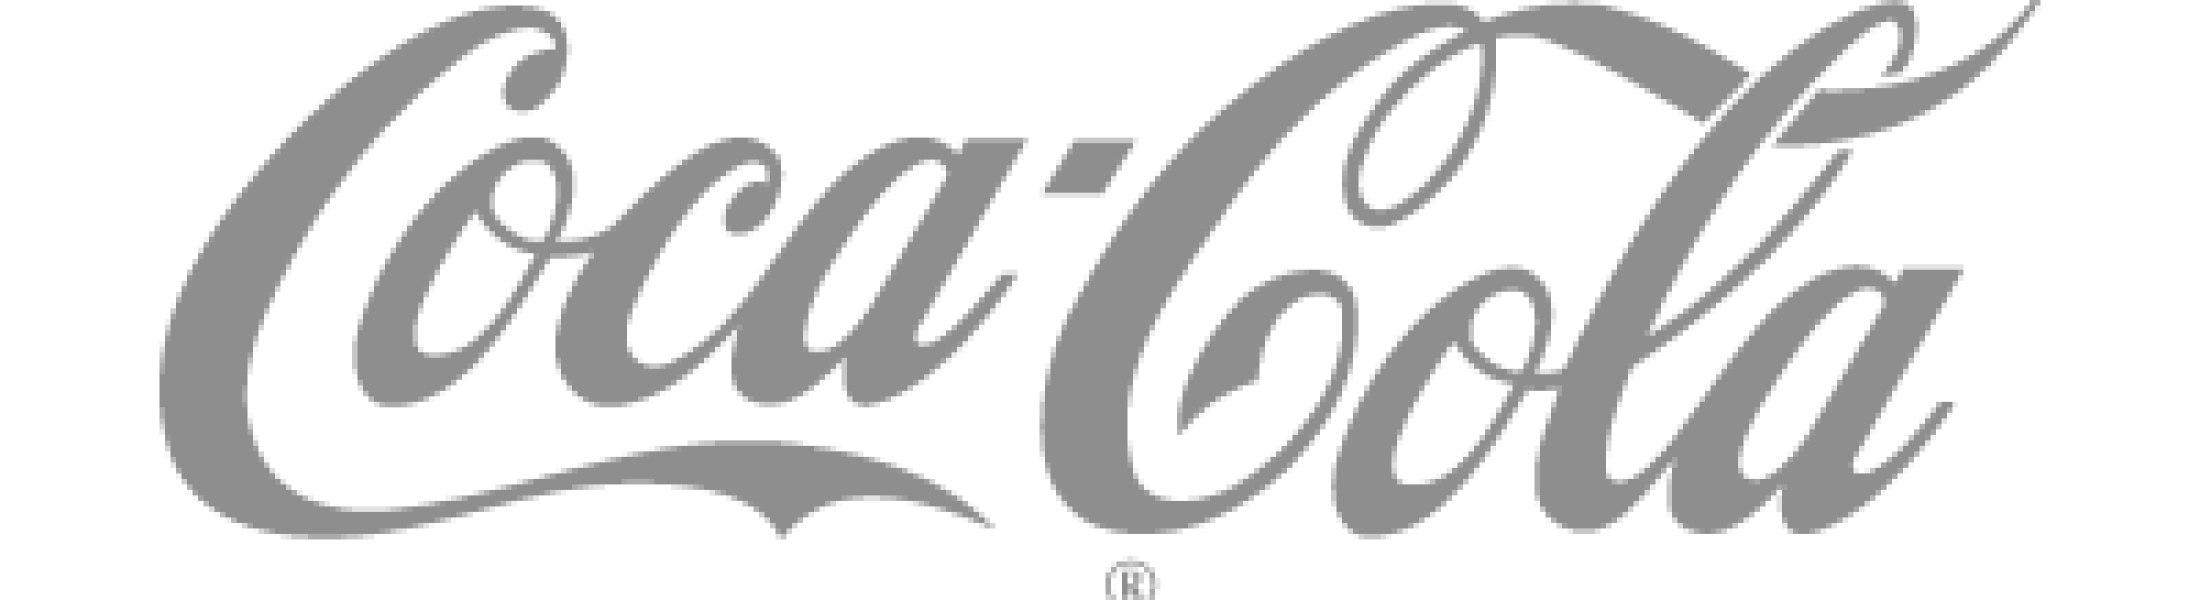 Gray coca cola icon - Free gray site logo icons